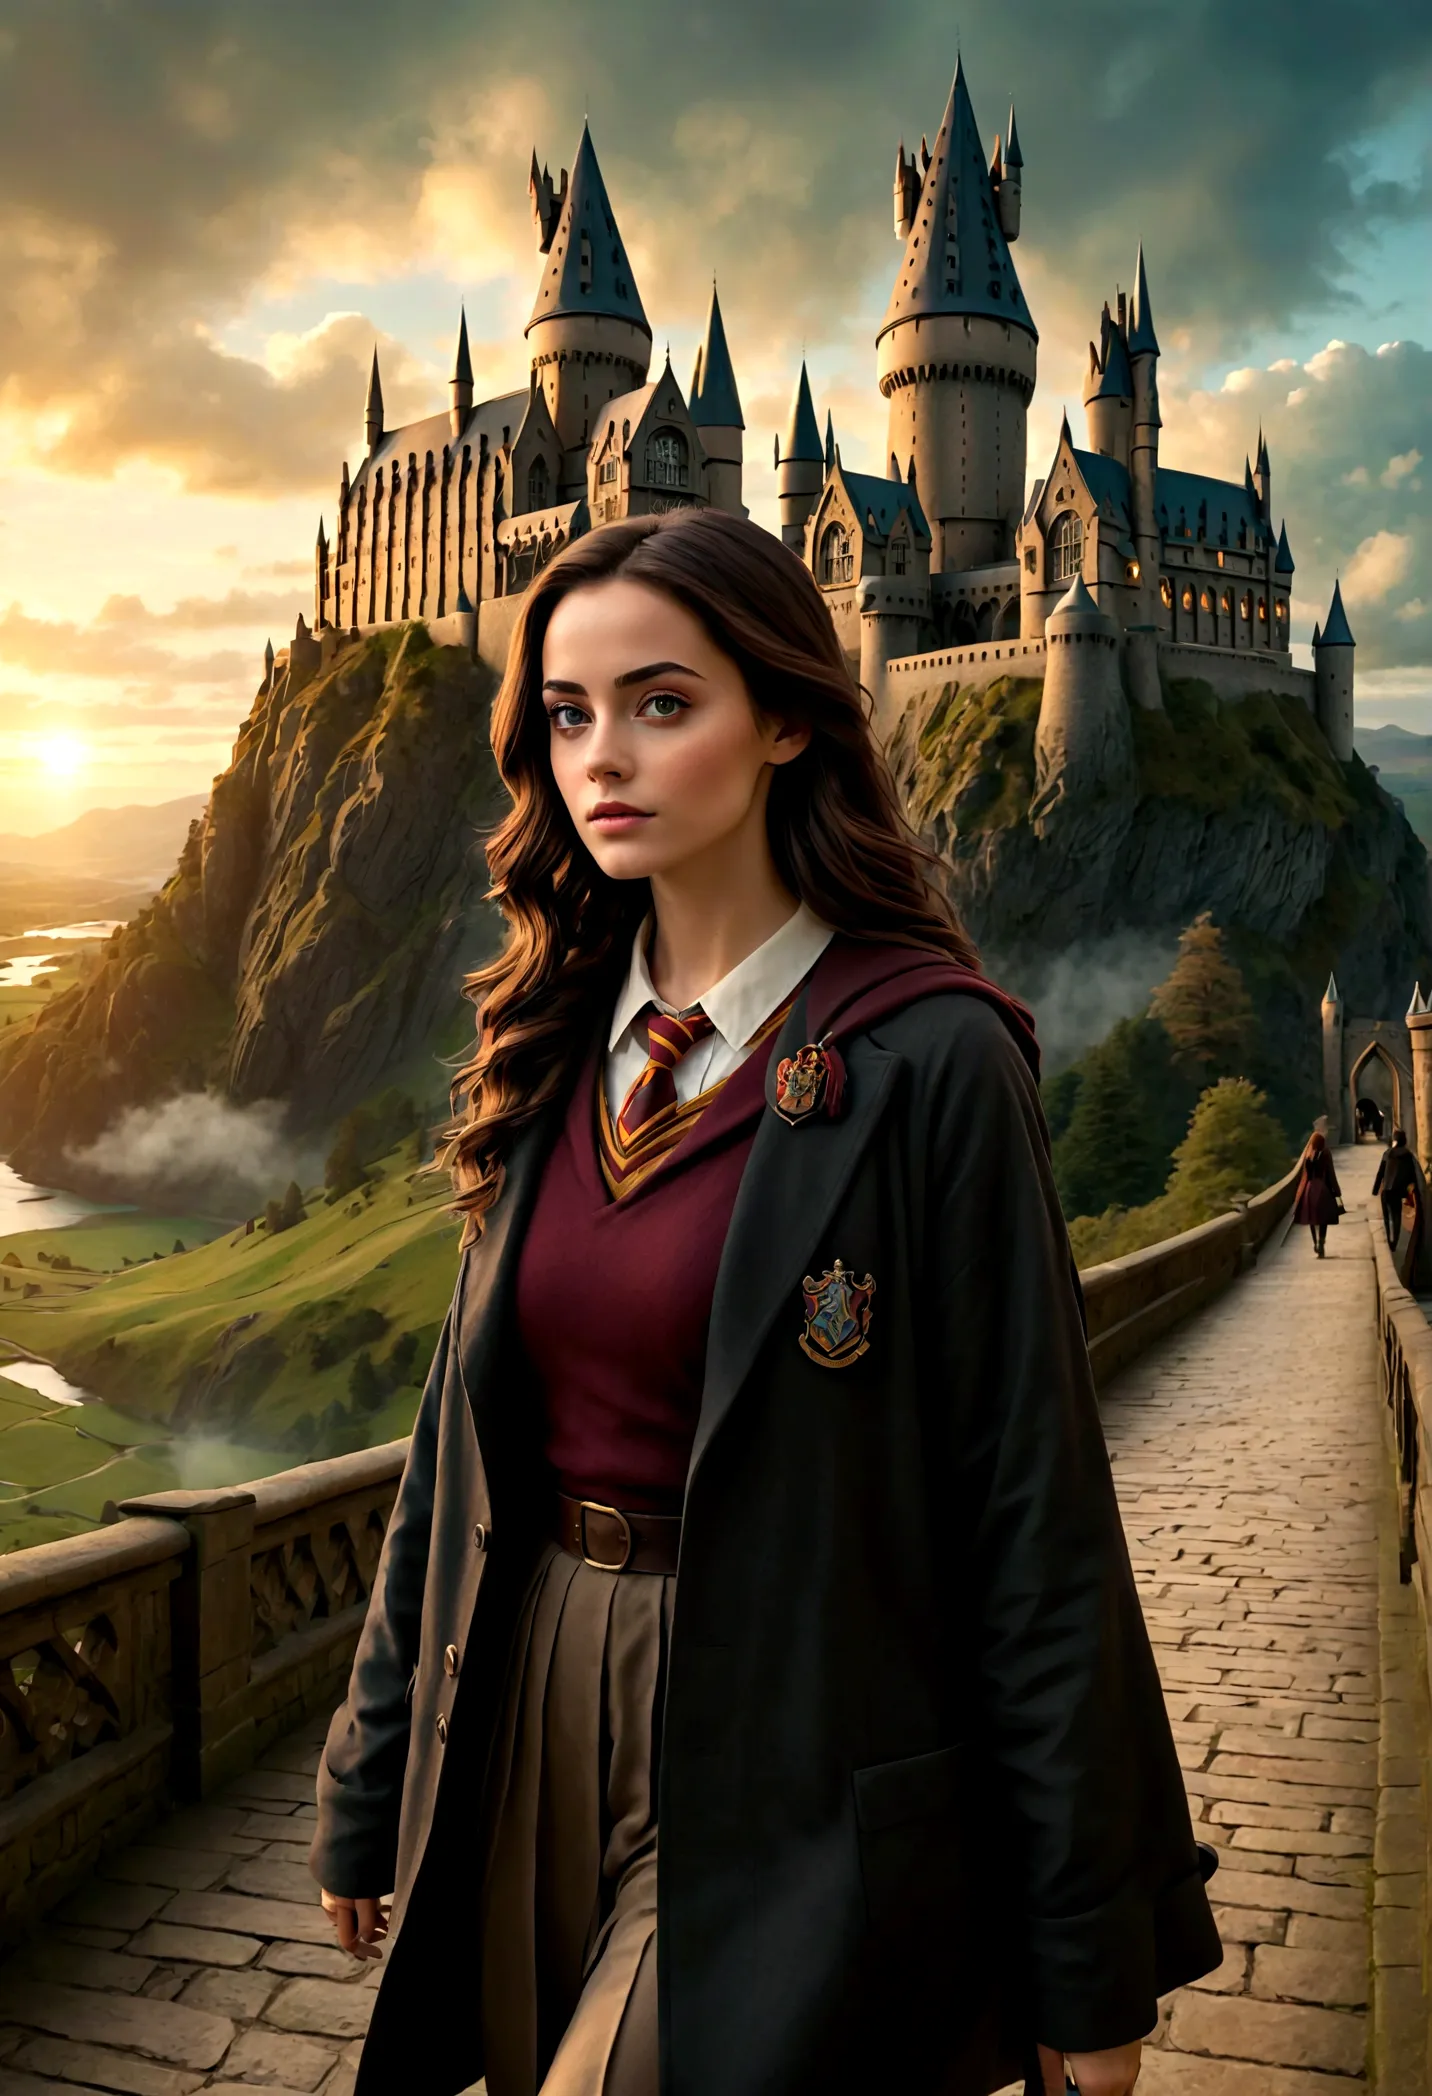 1 girl walking towards Hogwarts School of Witchcraft and Wizardry, looks like kaya scodelario, beautiful detailed eyes, beautifu...